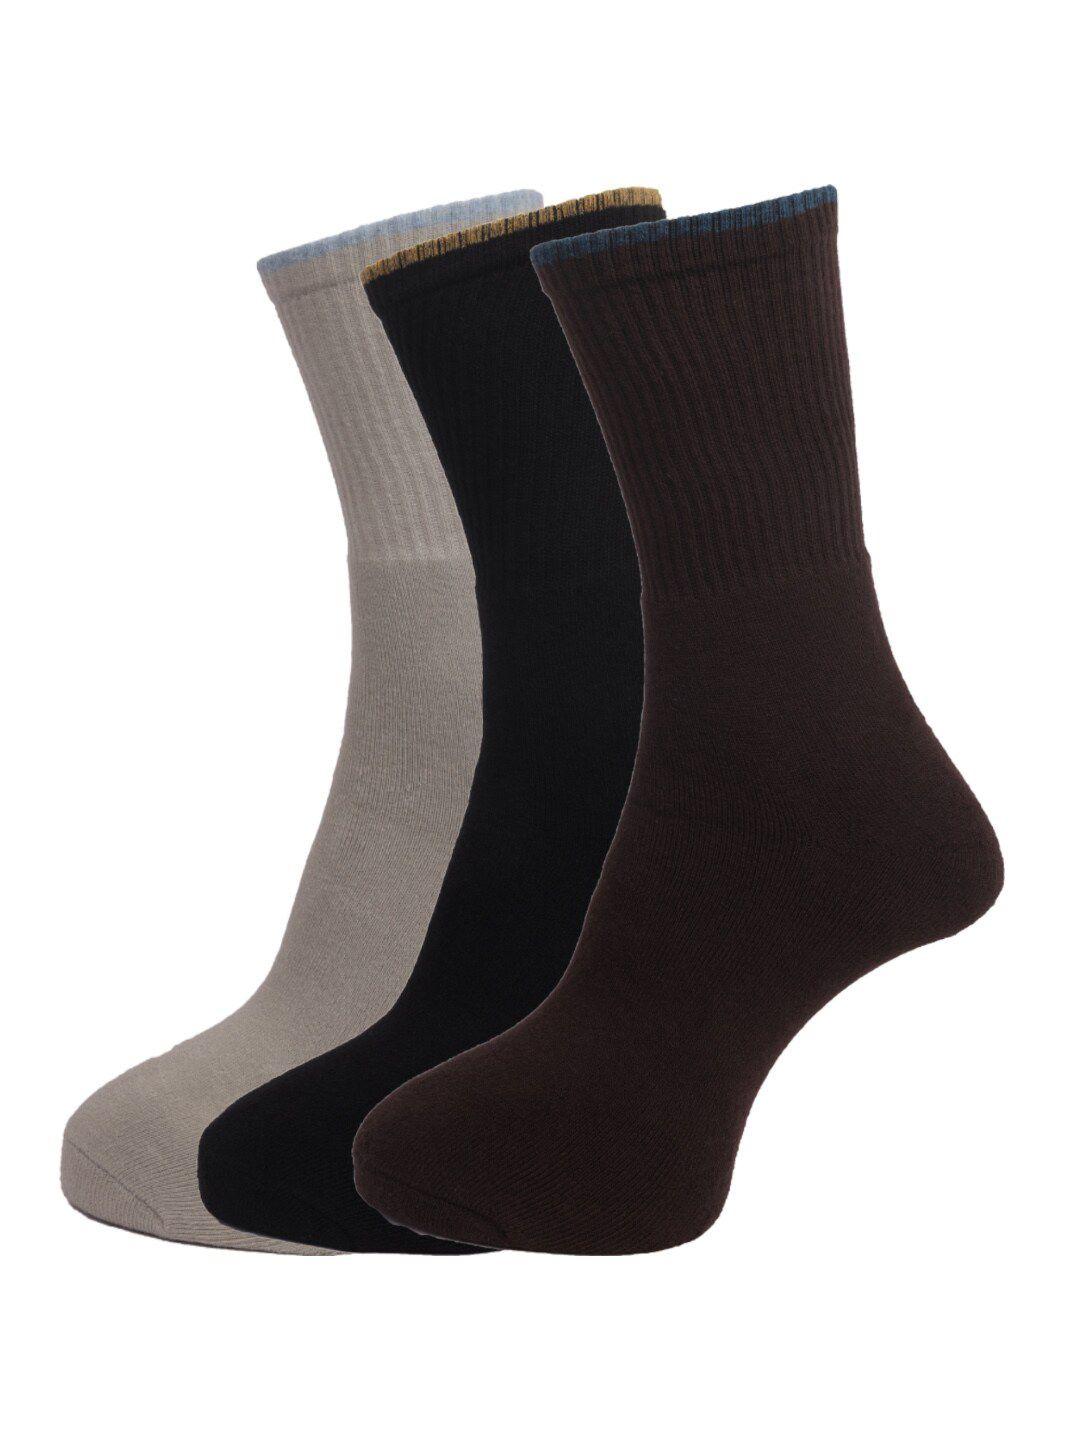 dollar-socks-men-pack-of-3-brown-&-black-solid-cotton-above-ankle-length-socks